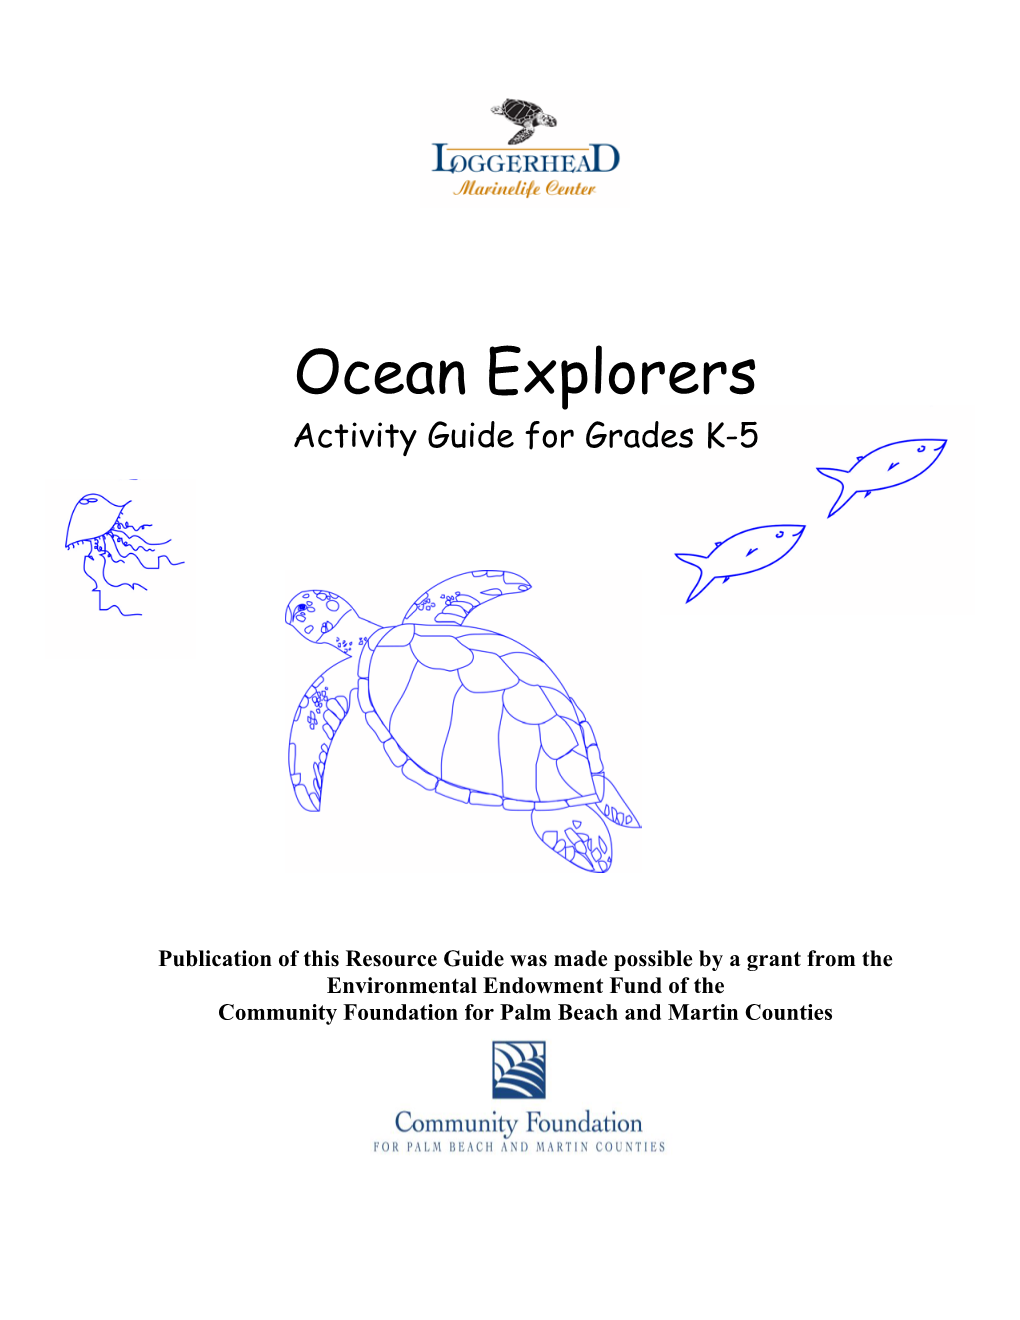 Ocean Explorers Activity Guide for Grades K-5